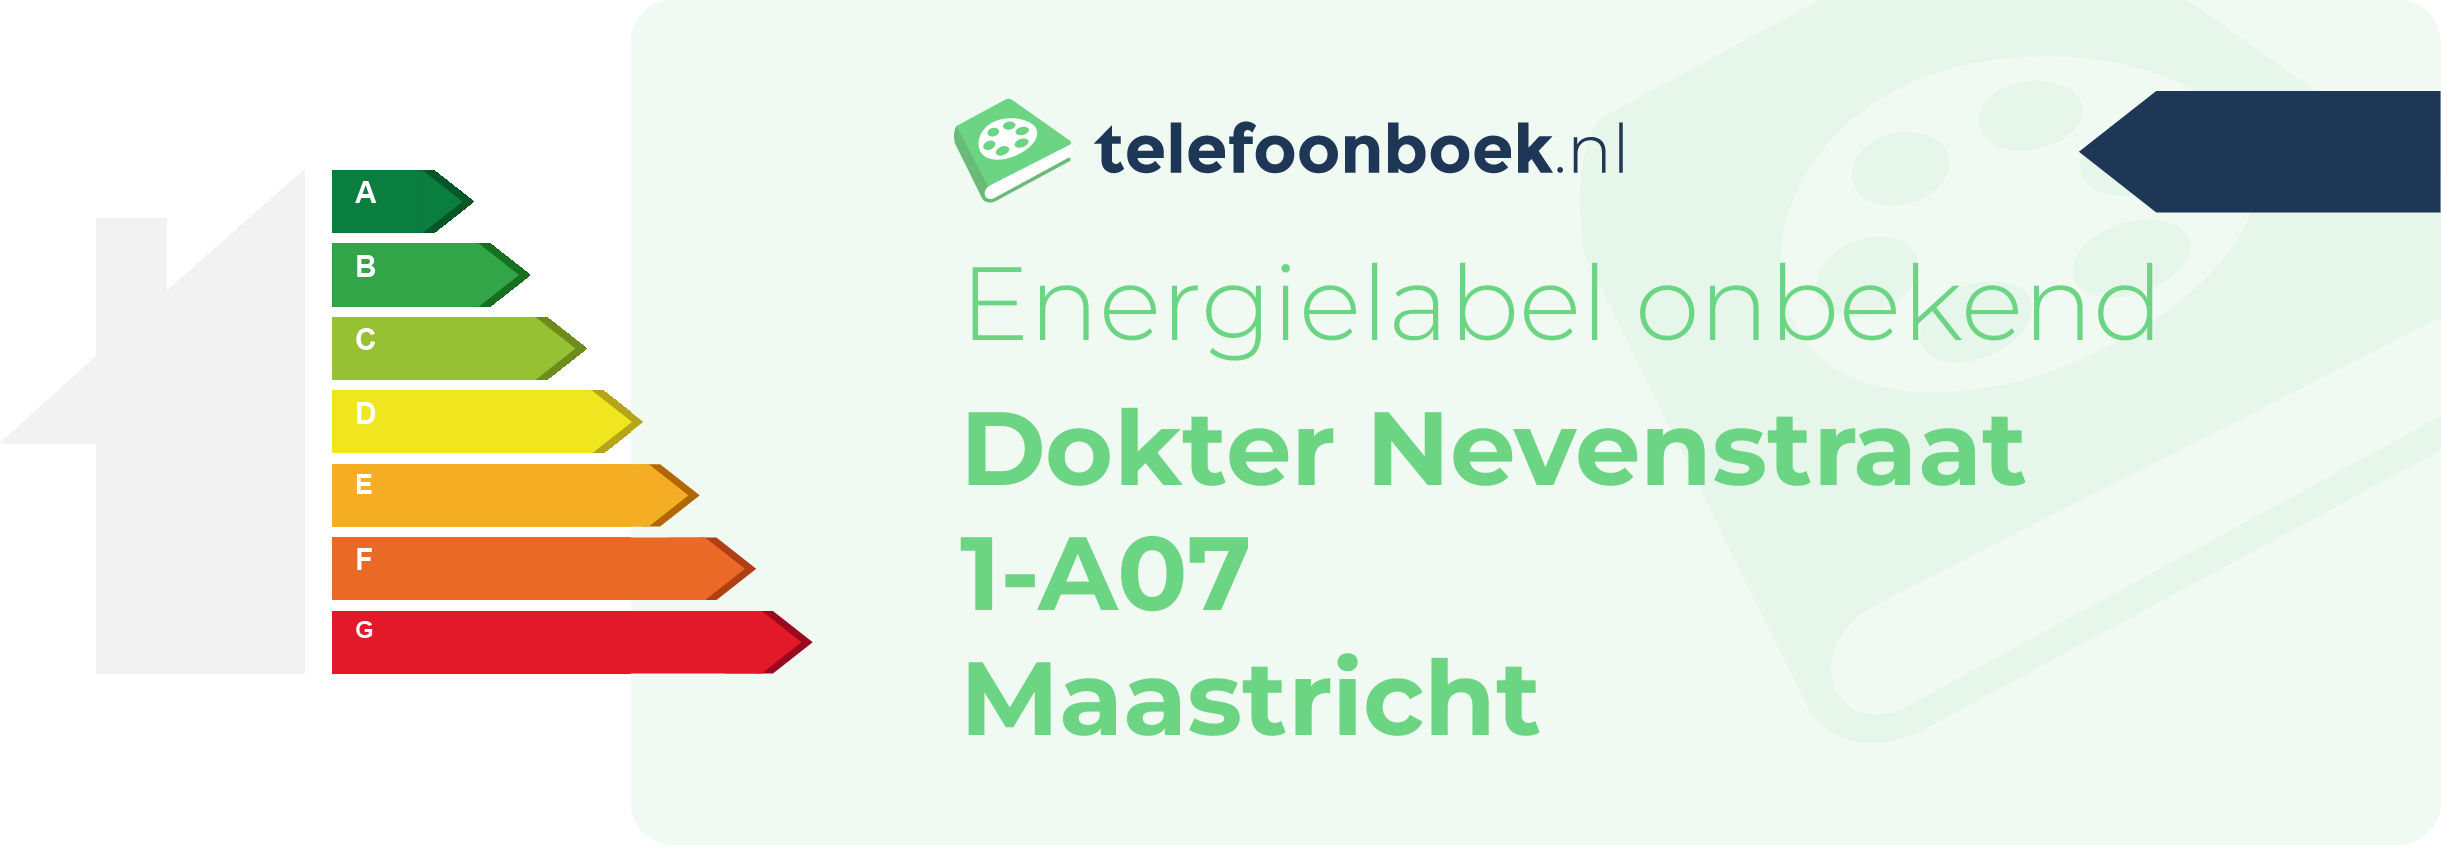 Energielabel Dokter Nevenstraat 1-A07 Maastricht